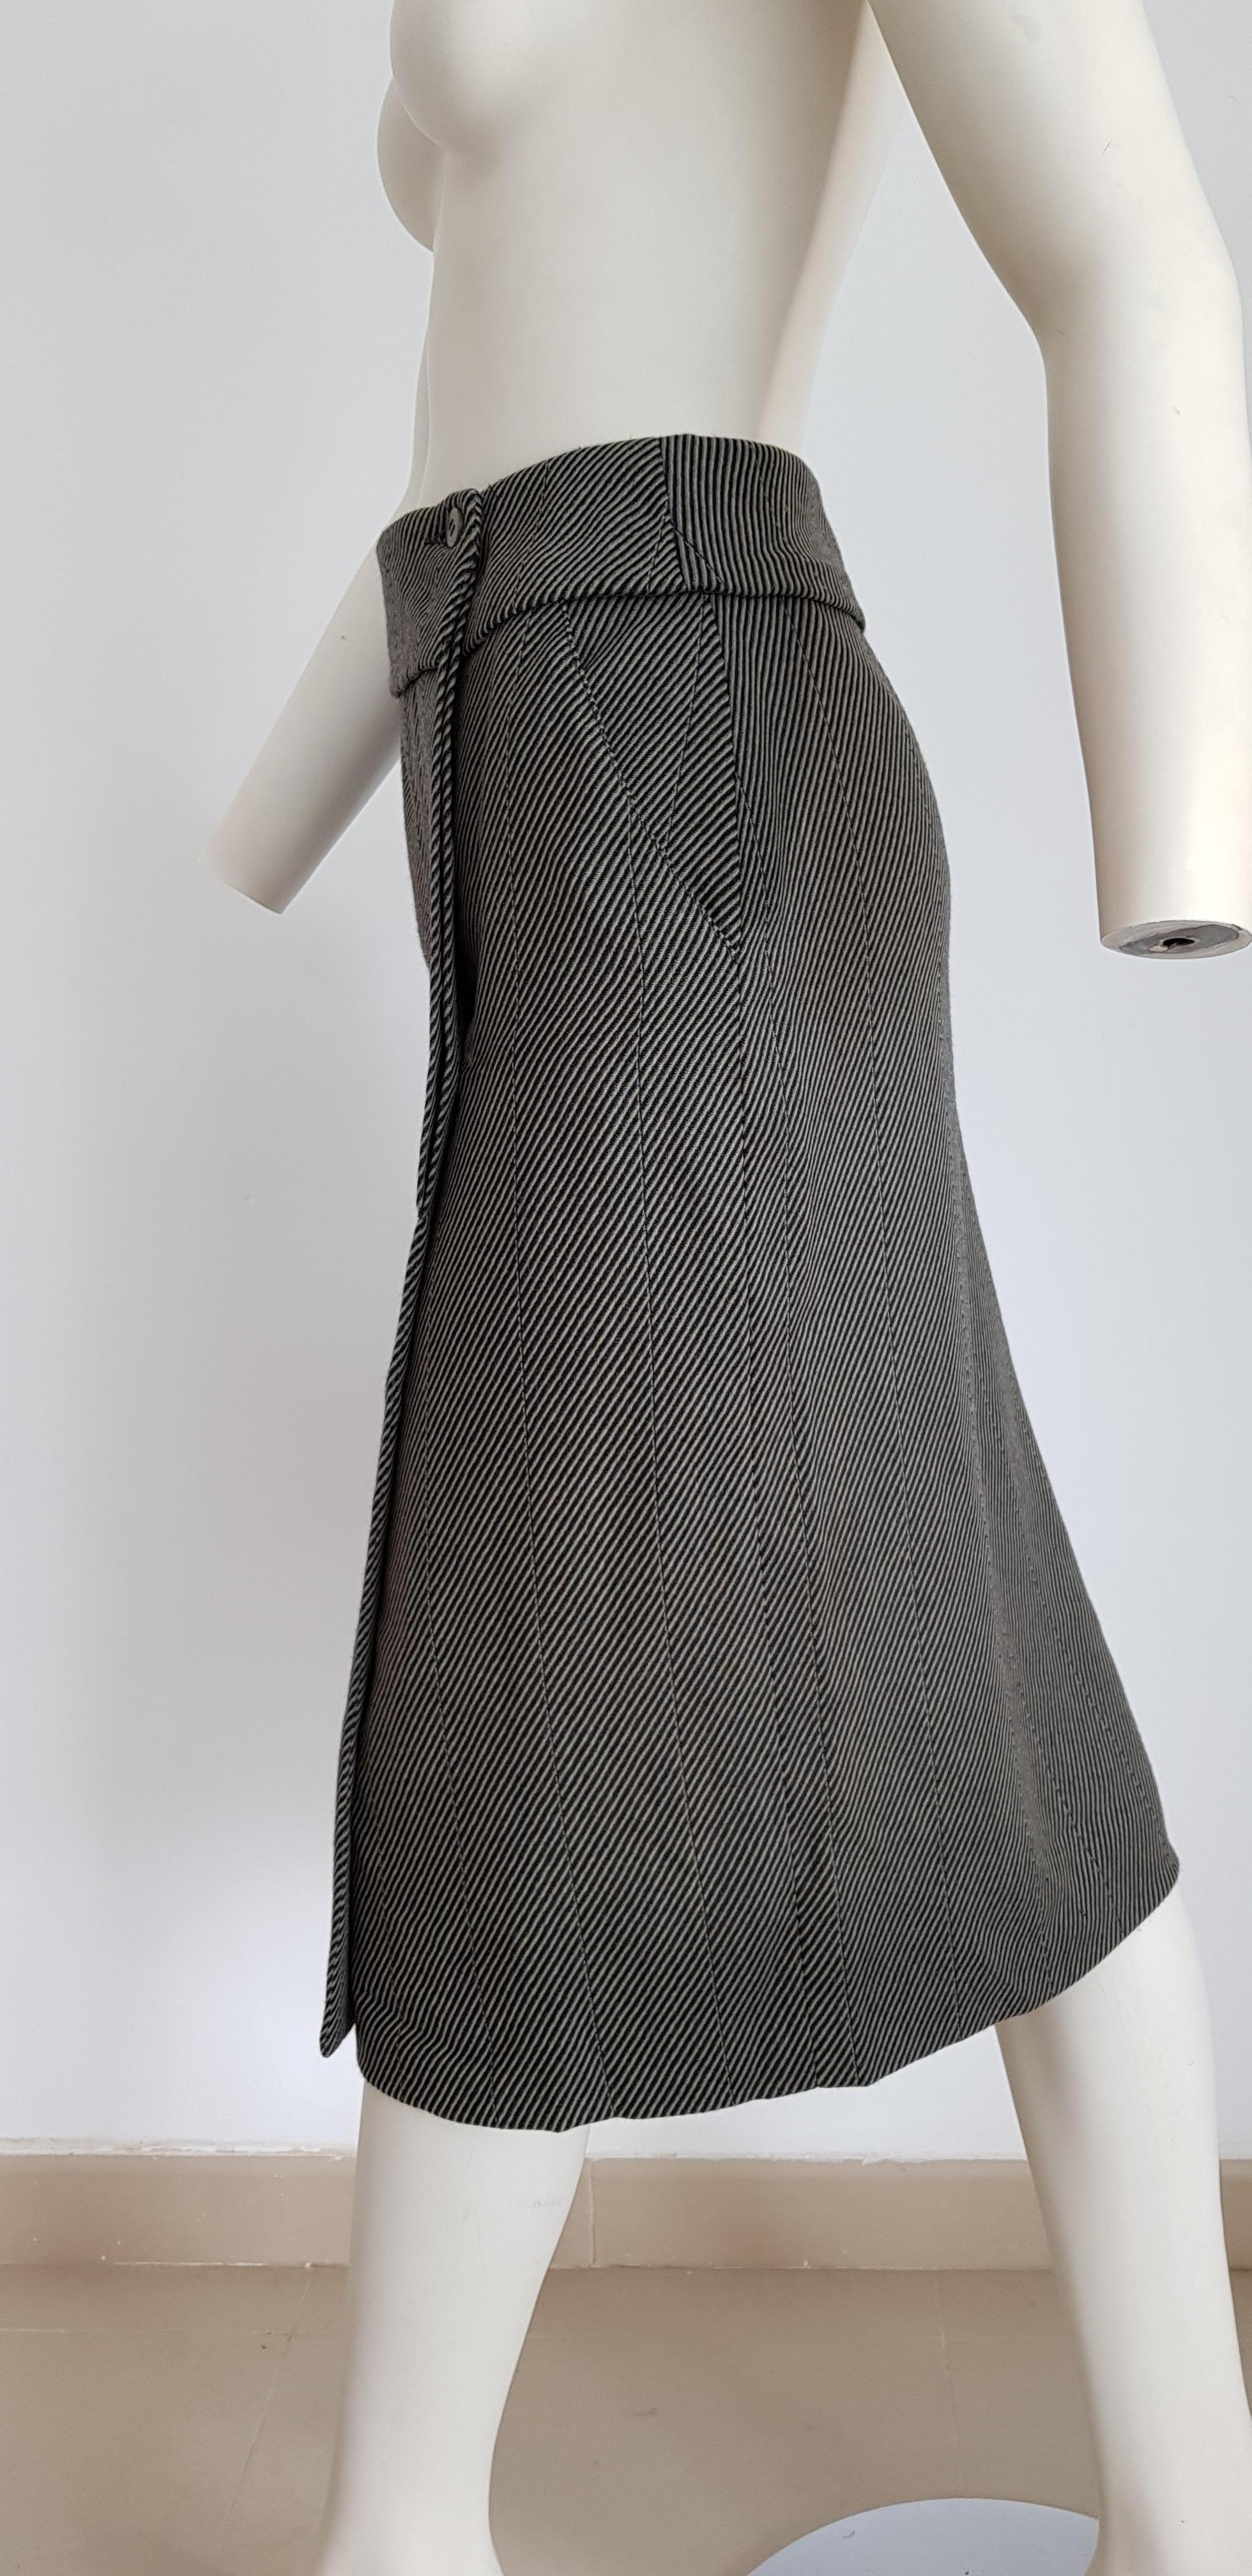 Giorgio ARMANI dark and light grey lines, jacket skirt wool suit - Unworn, New For Sale 1